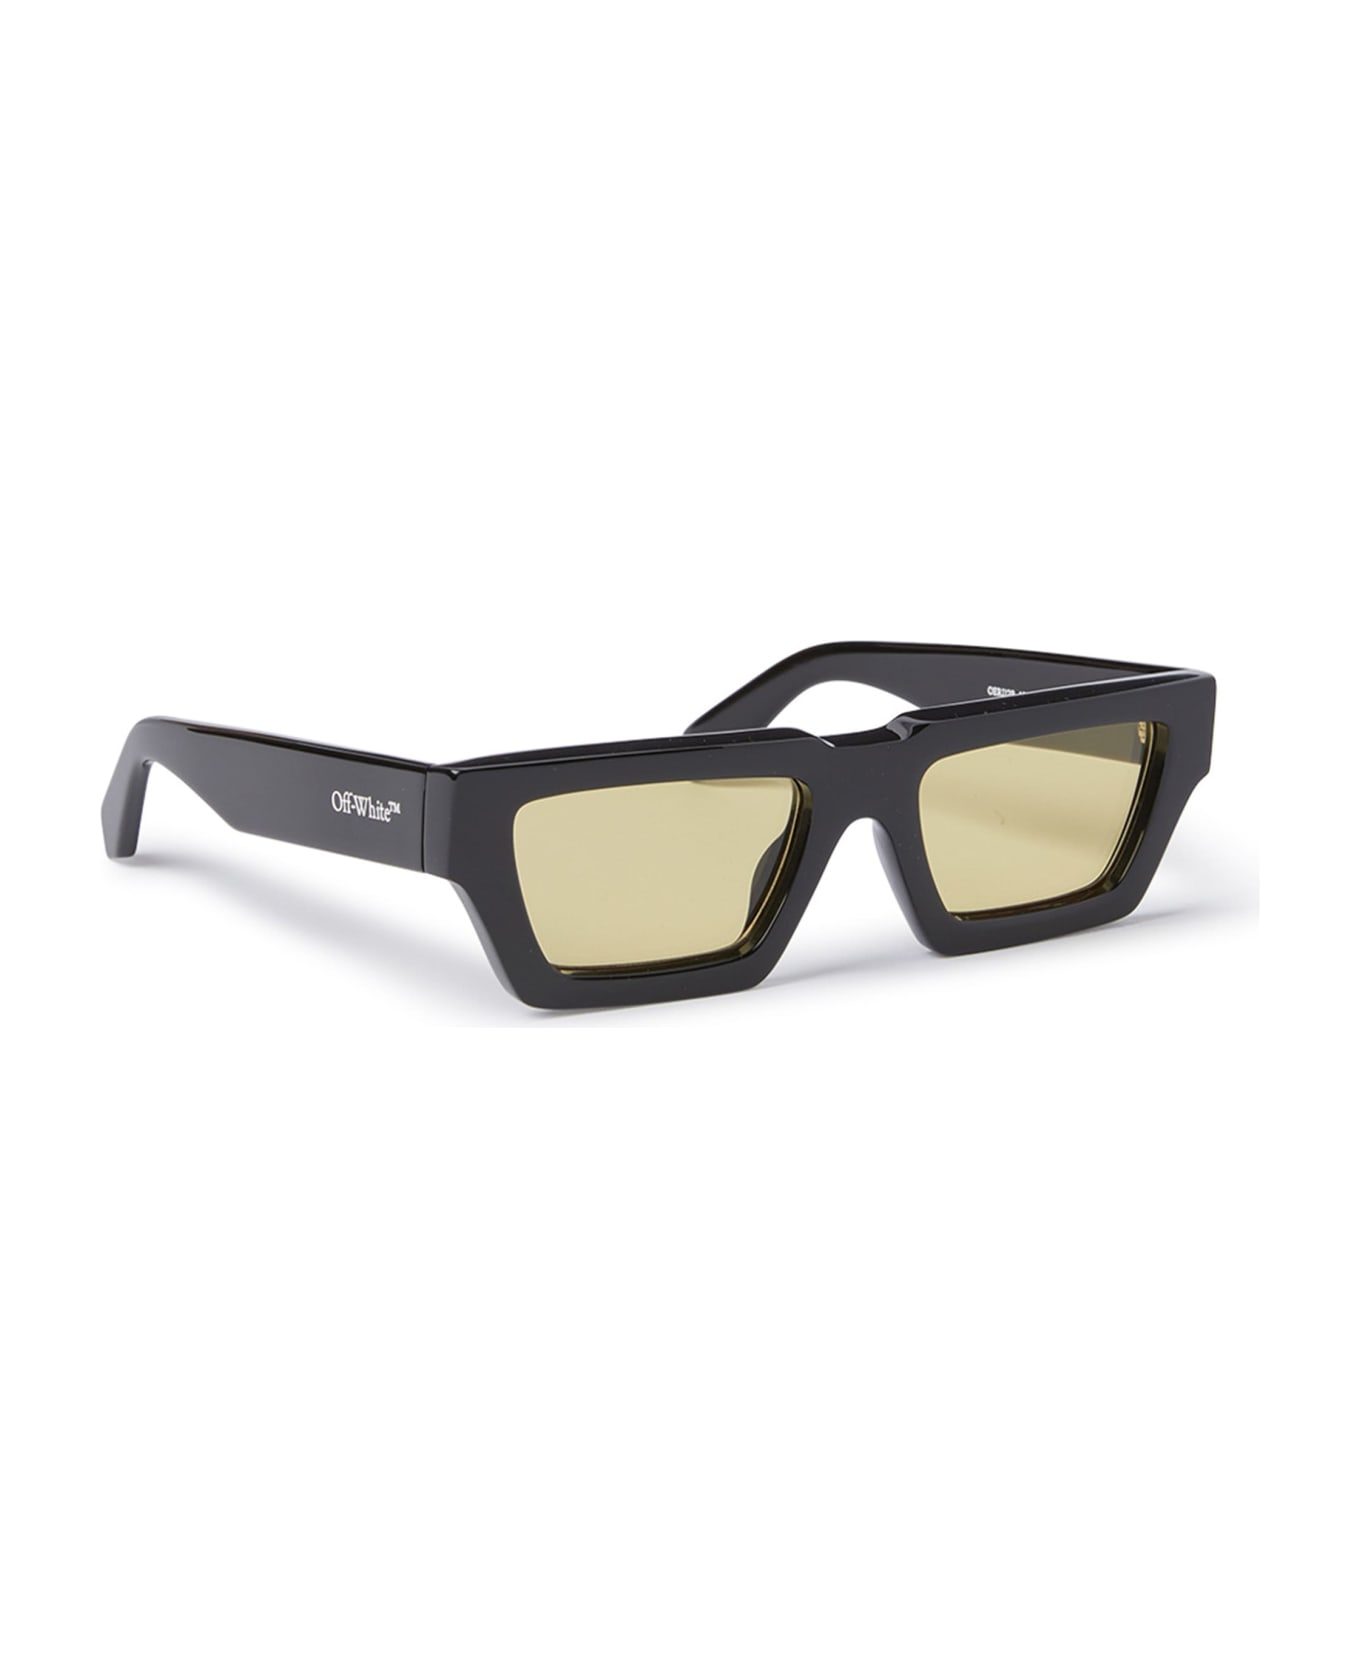 Off-White Manchester Sunglasses - Black